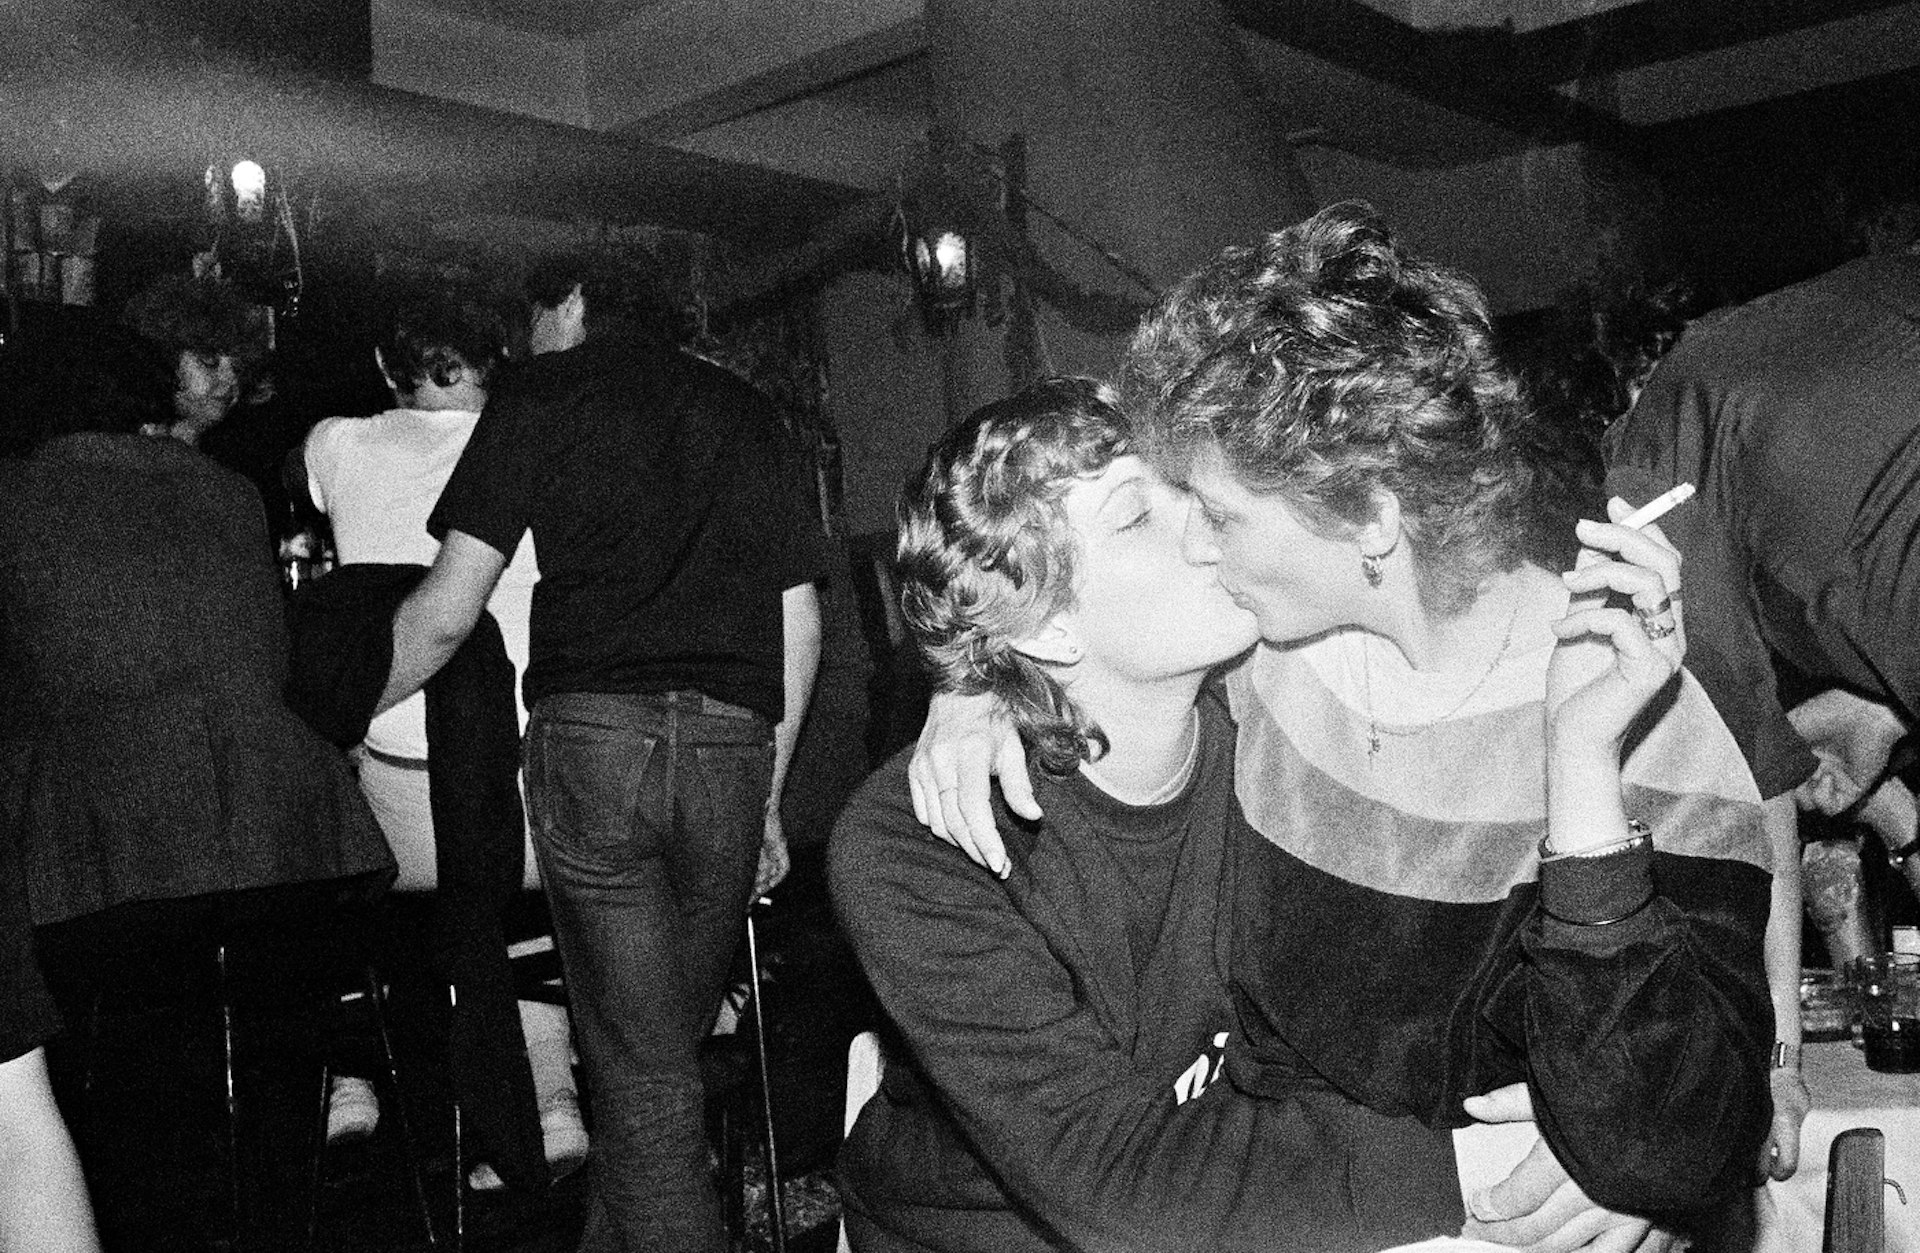 Documenting LGBTQ hedonism in ’80s Czechoslovakia